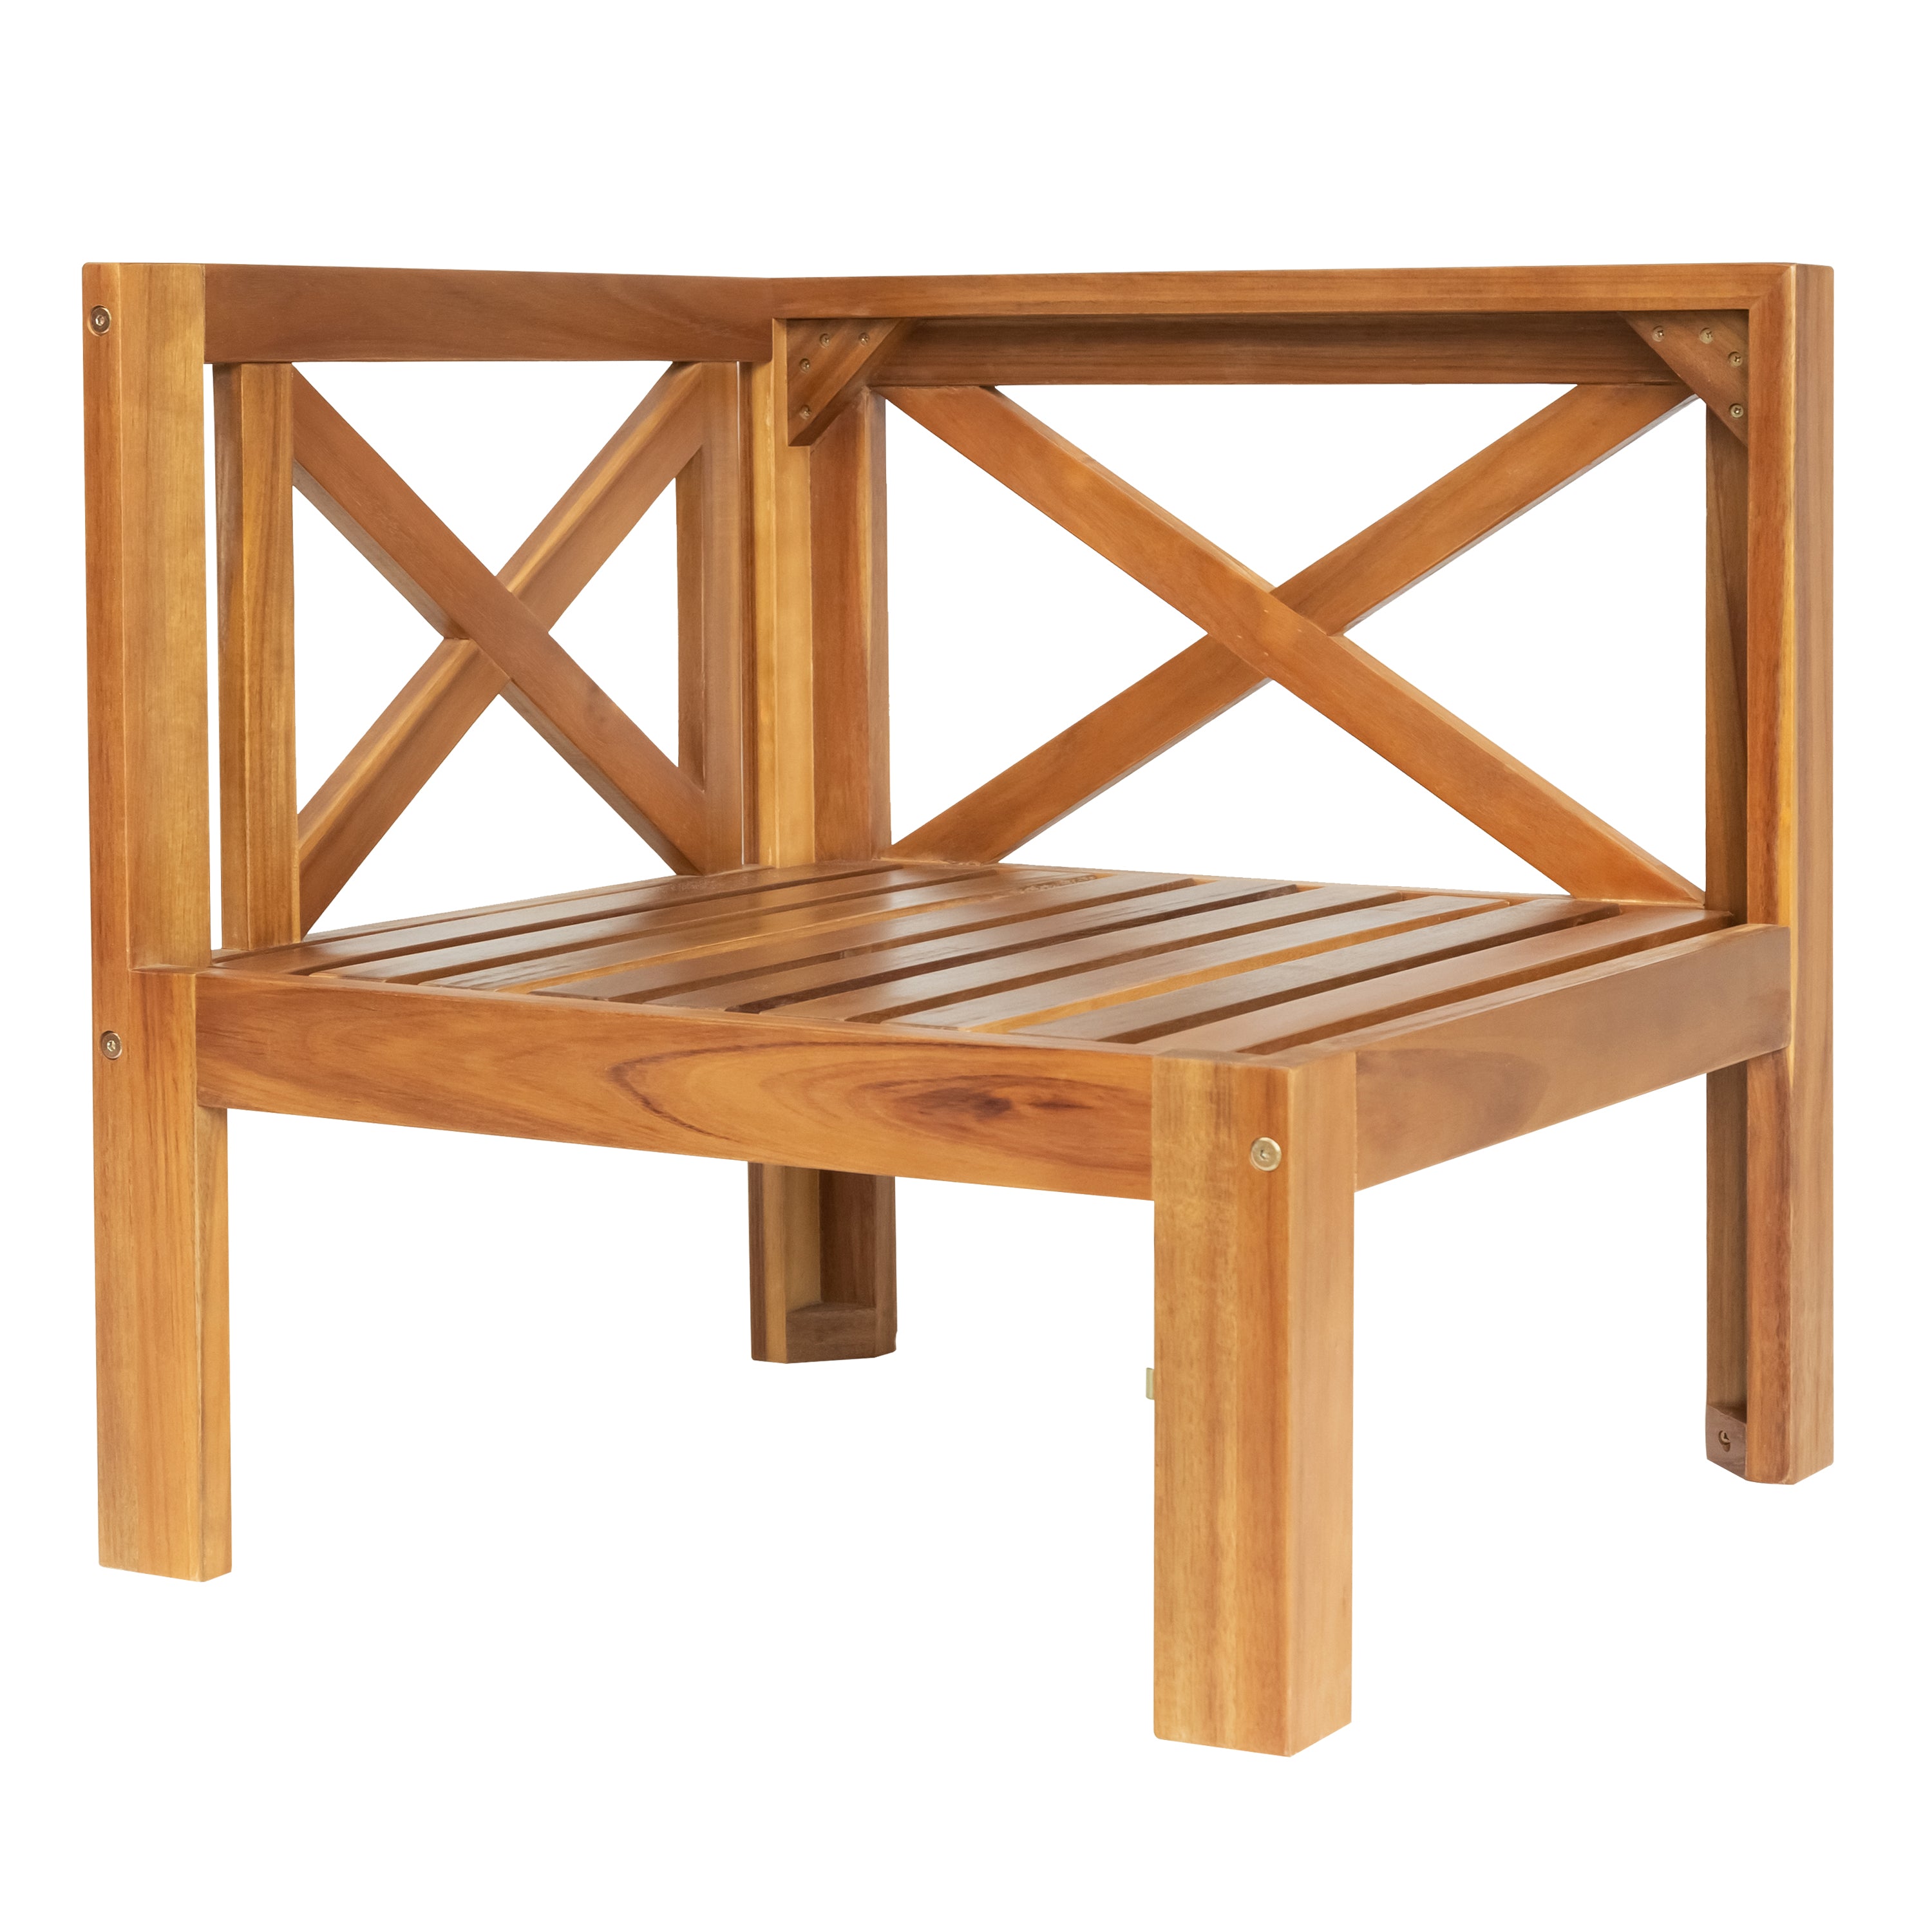 Patio Wood 5-Piece Sectional Sofa Set